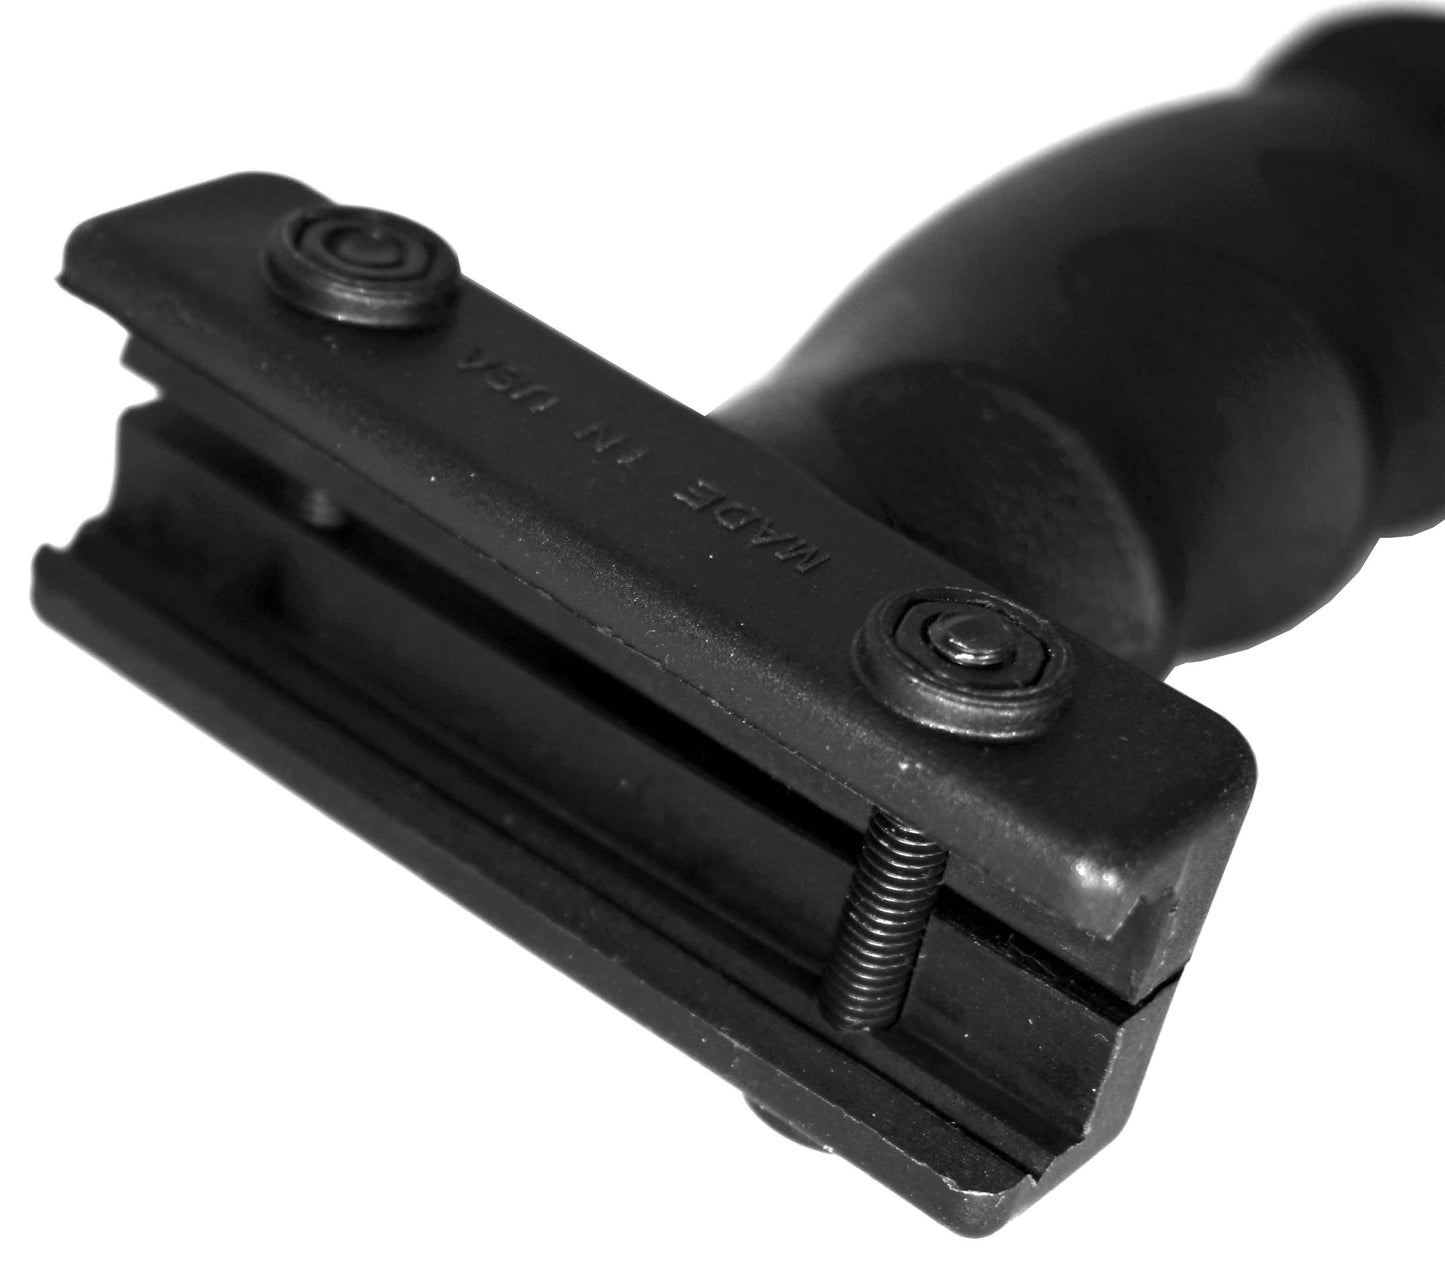 Tactical grip black for Tactical paintball guns.